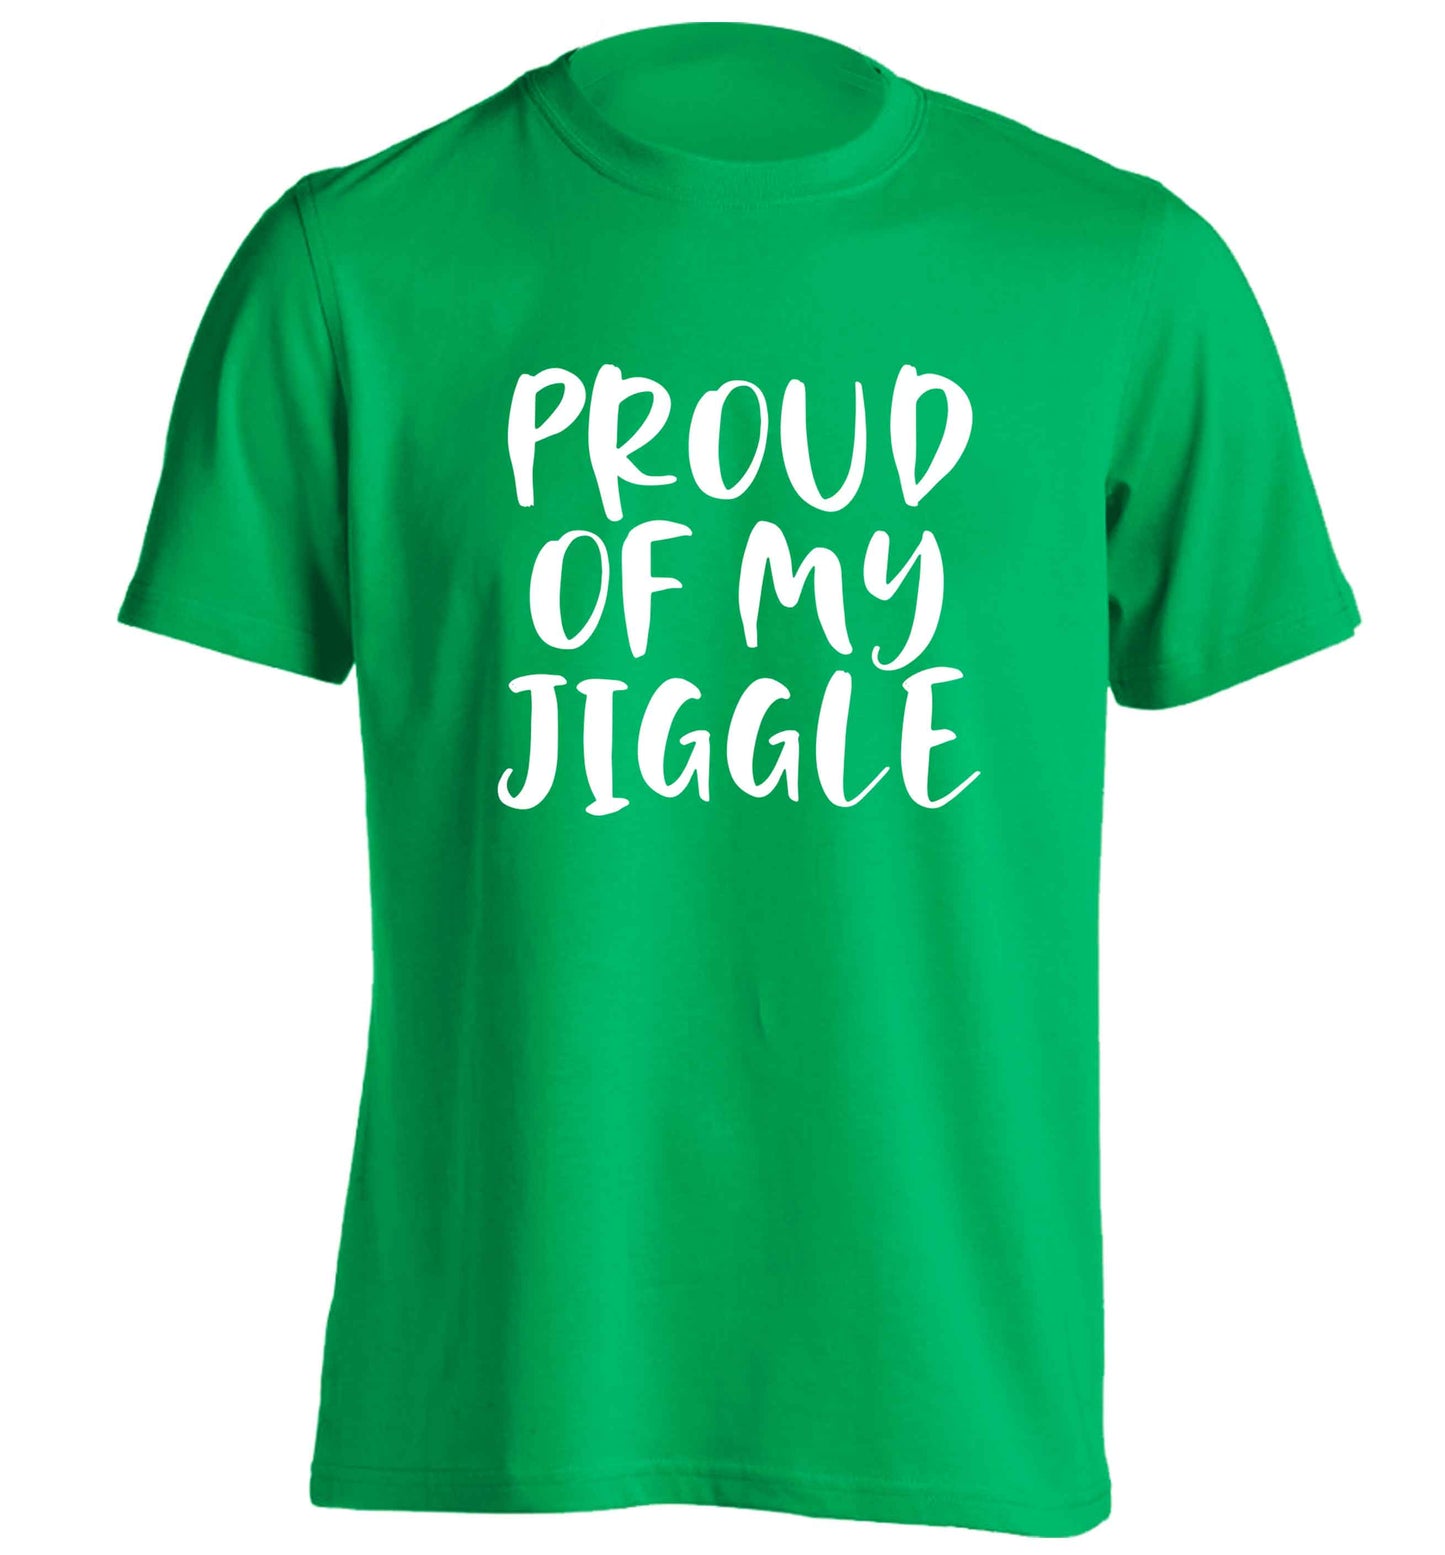 Proud of my jiggle adults unisex green Tshirt 2XL